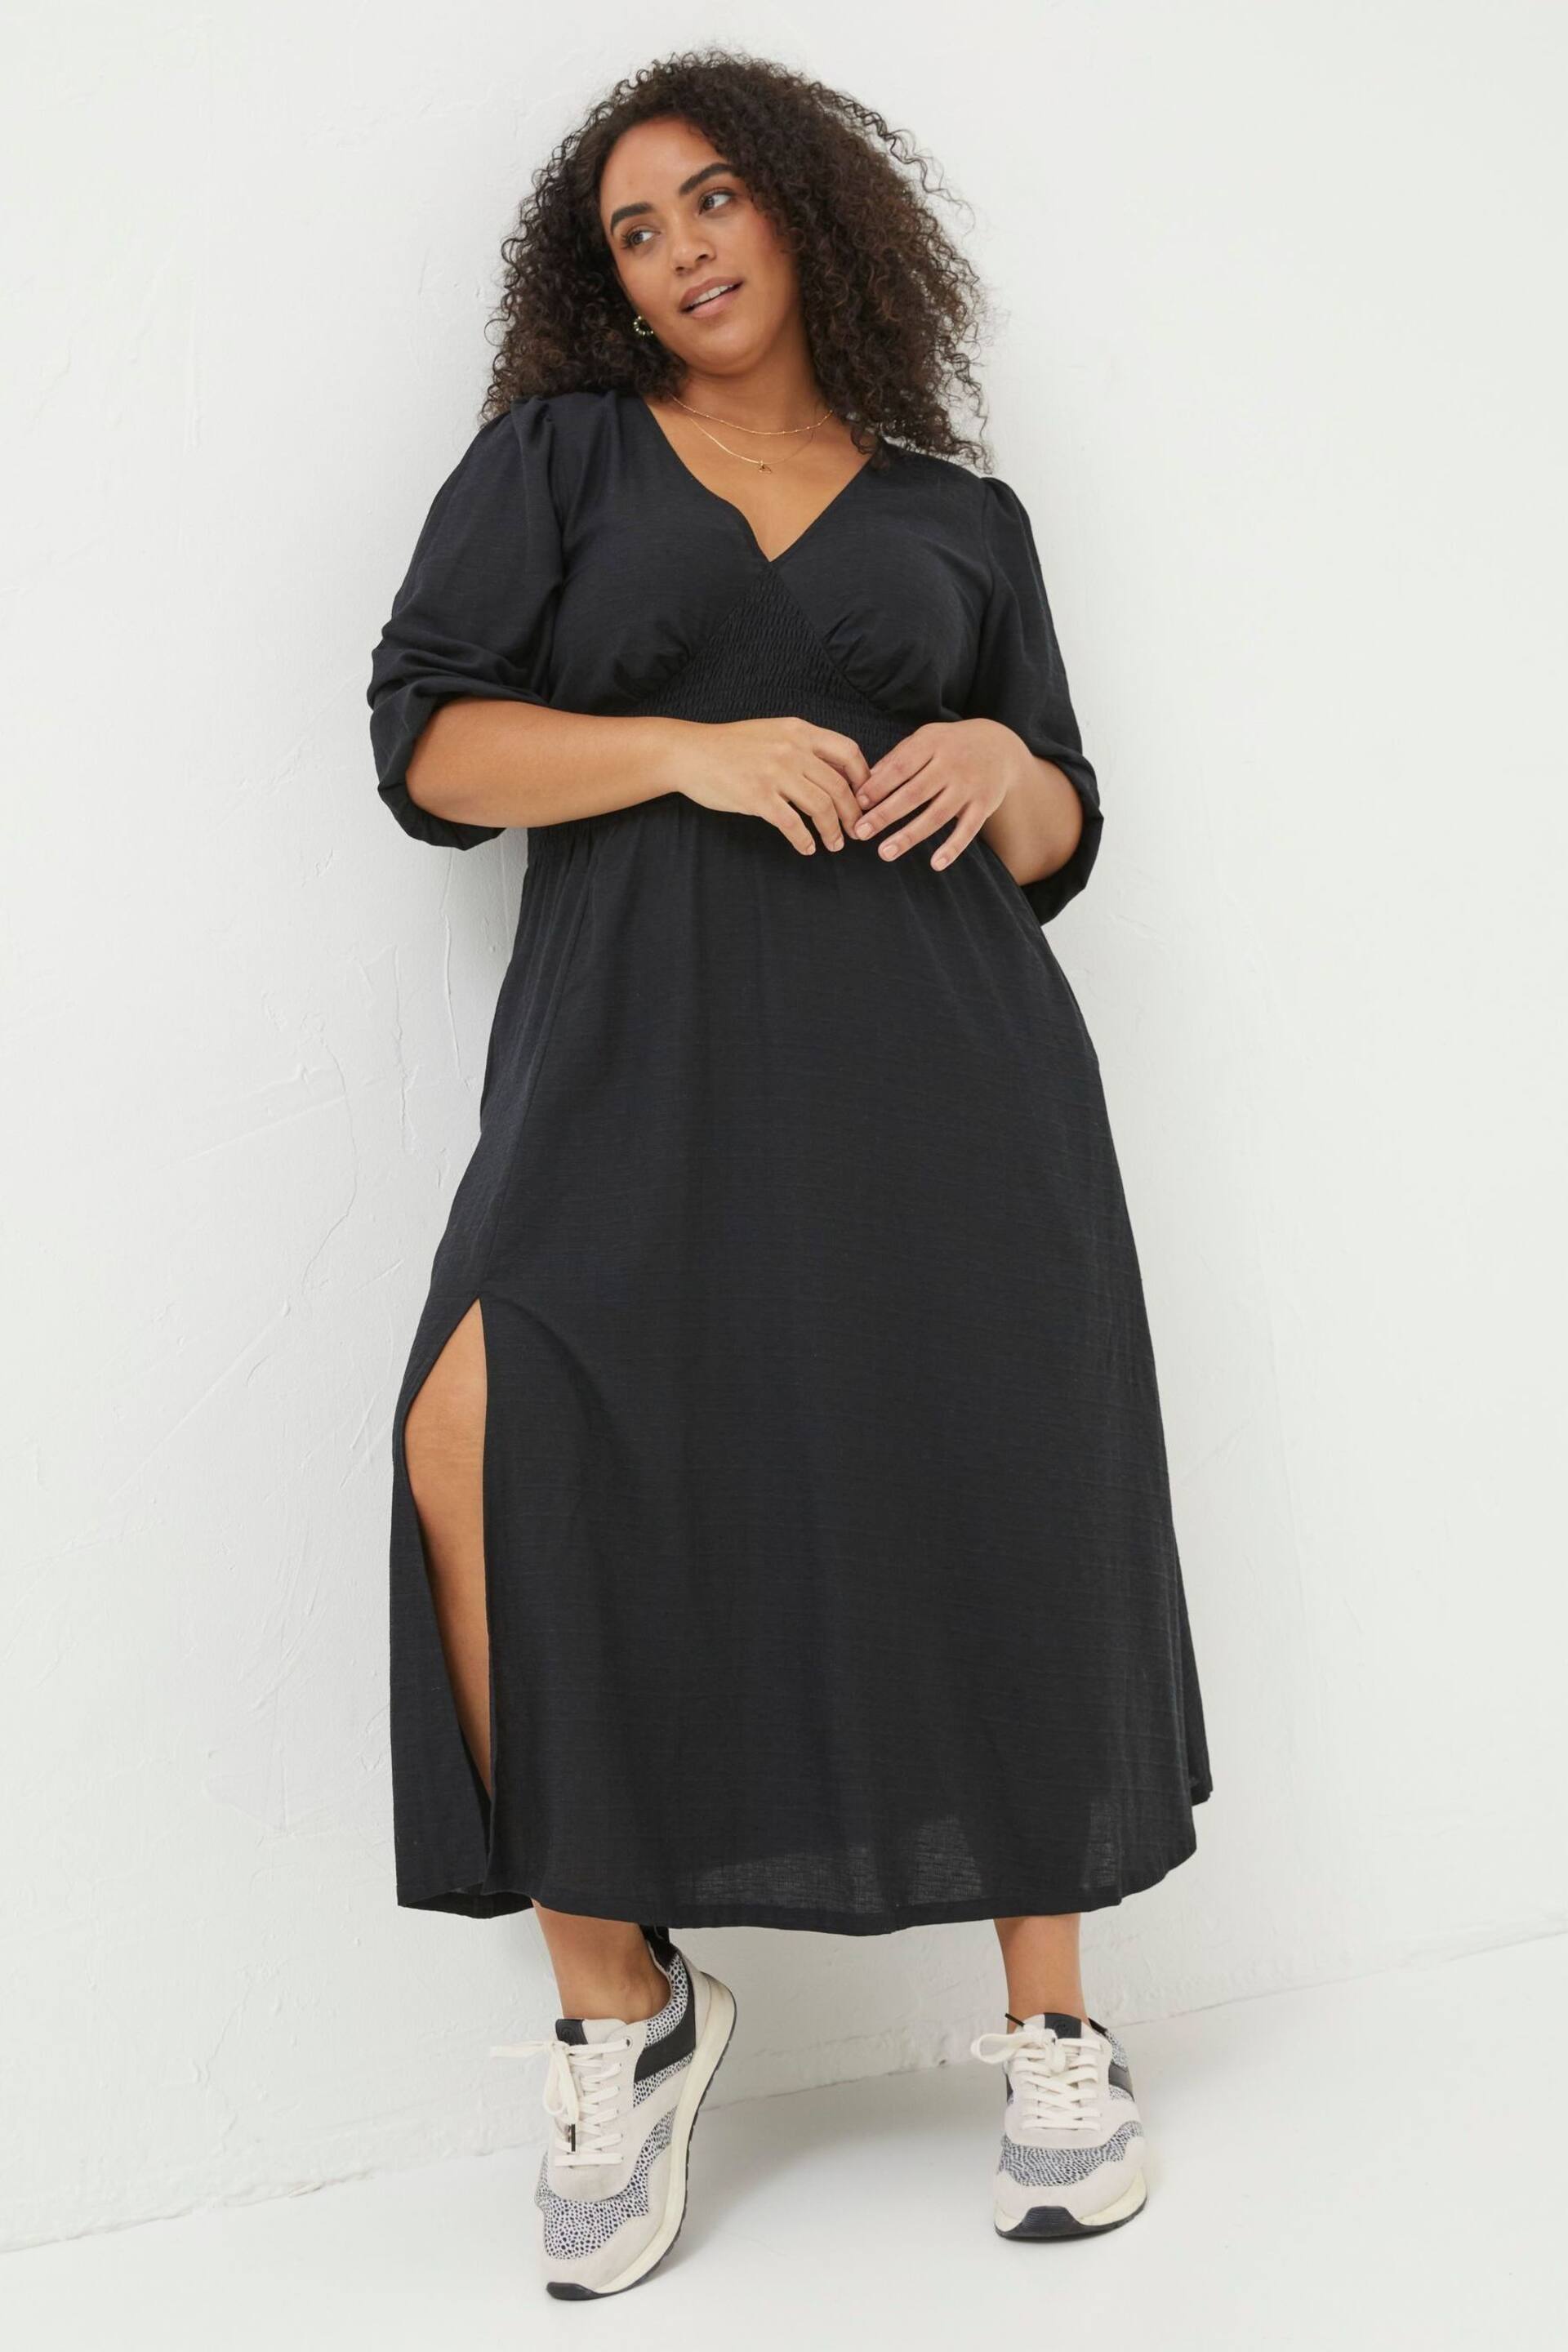 FatFace Black Rene Midi Dress - Image 6 of 7